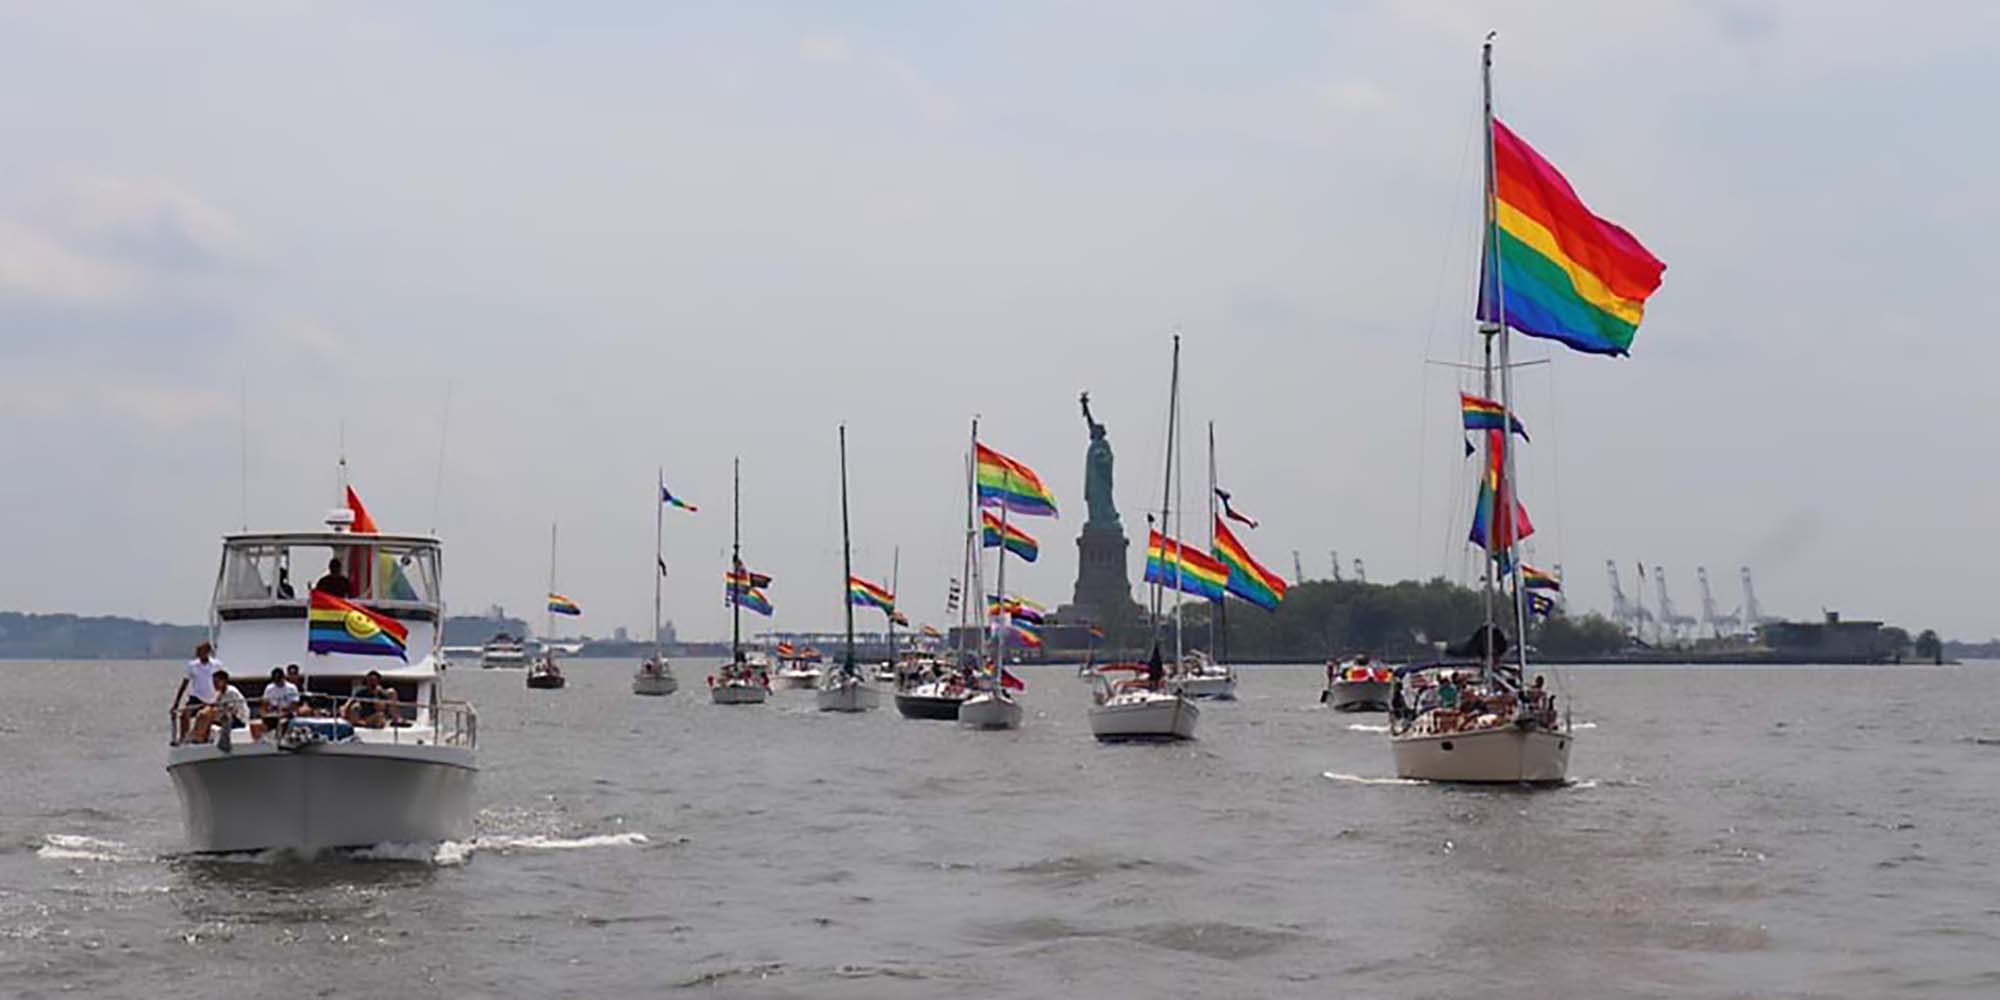 Rainbows on the Hudson Pride Parade